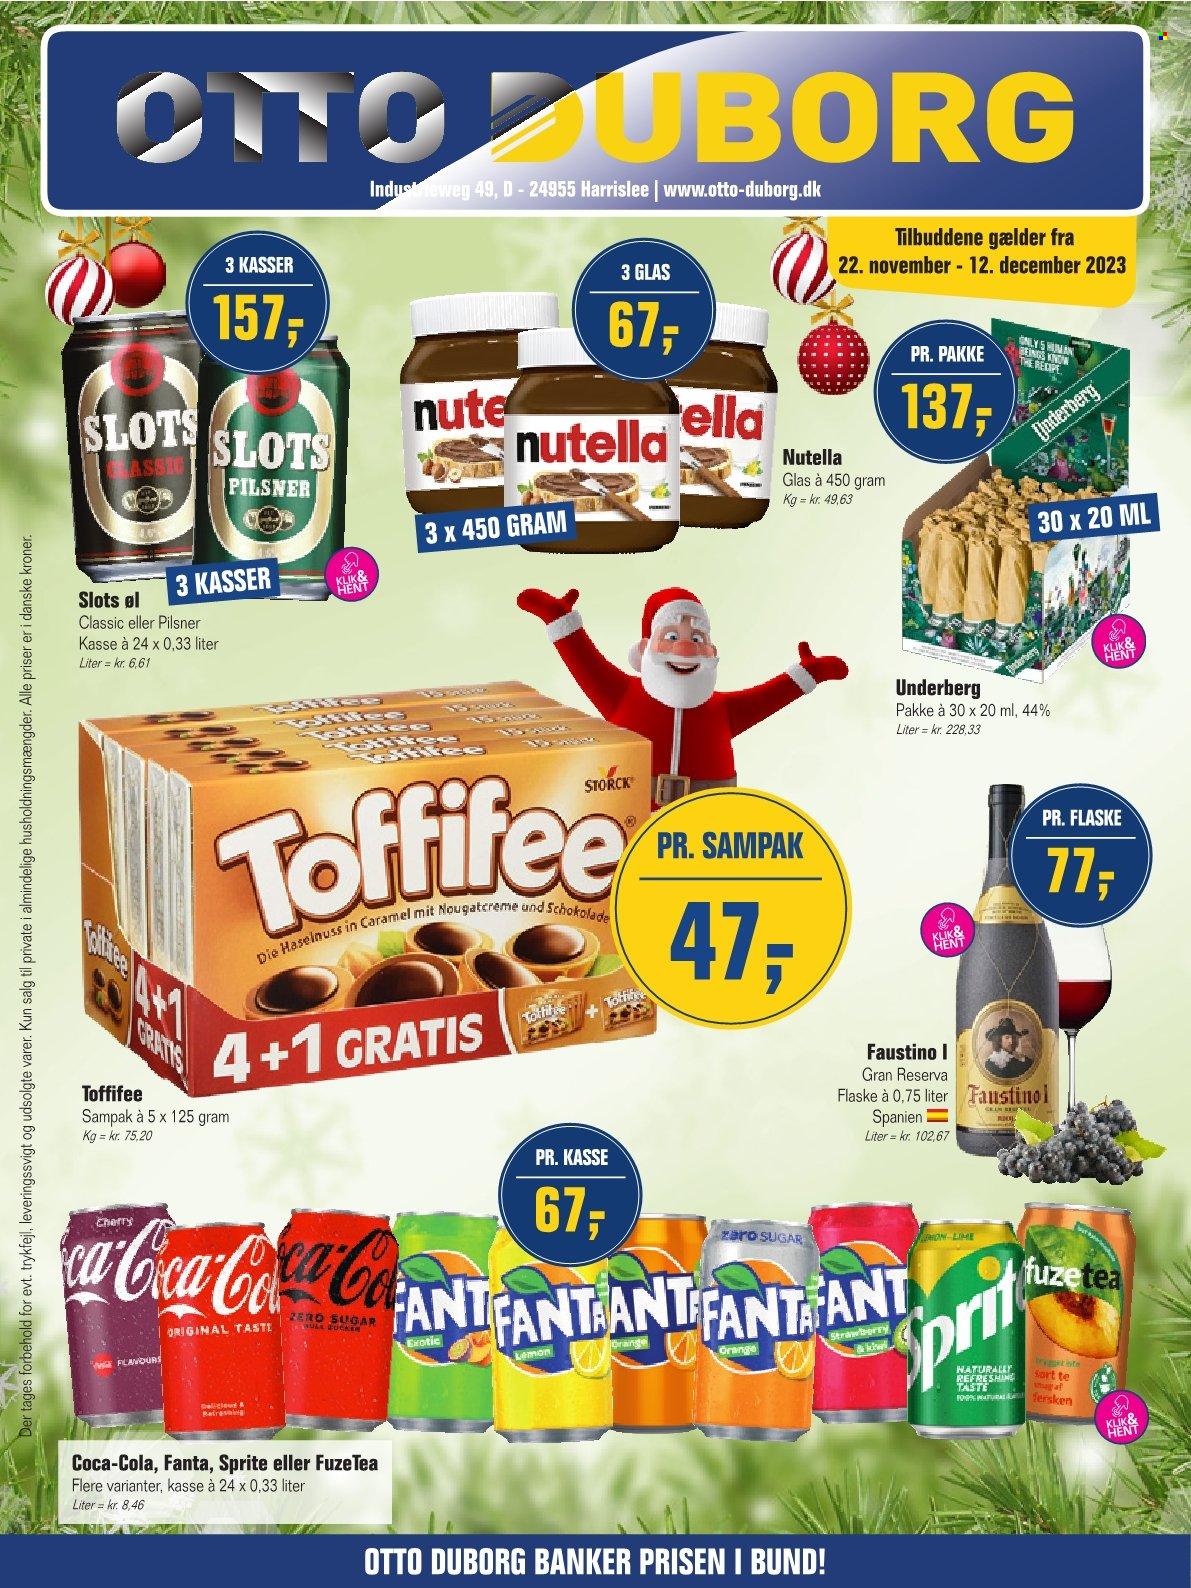 Otto Duborg tilbud  - 22.11.2023 - 12.12.2023 - tilbudsprodukter - fersken, Toffifee, Nutella, vin. Side 1.